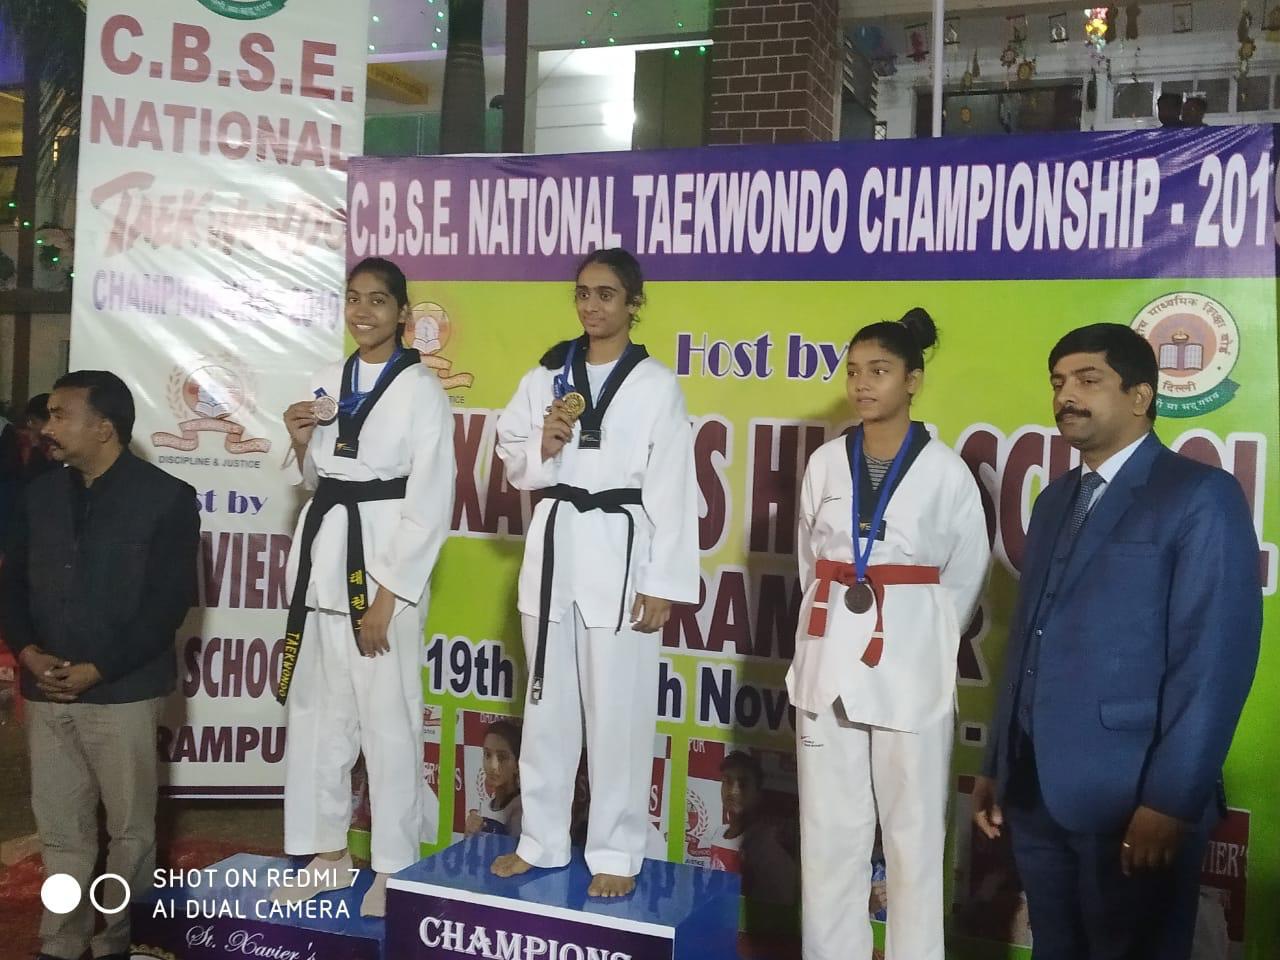 Sanskar student wins Silver medal in CBSE National Taekwondo Championship